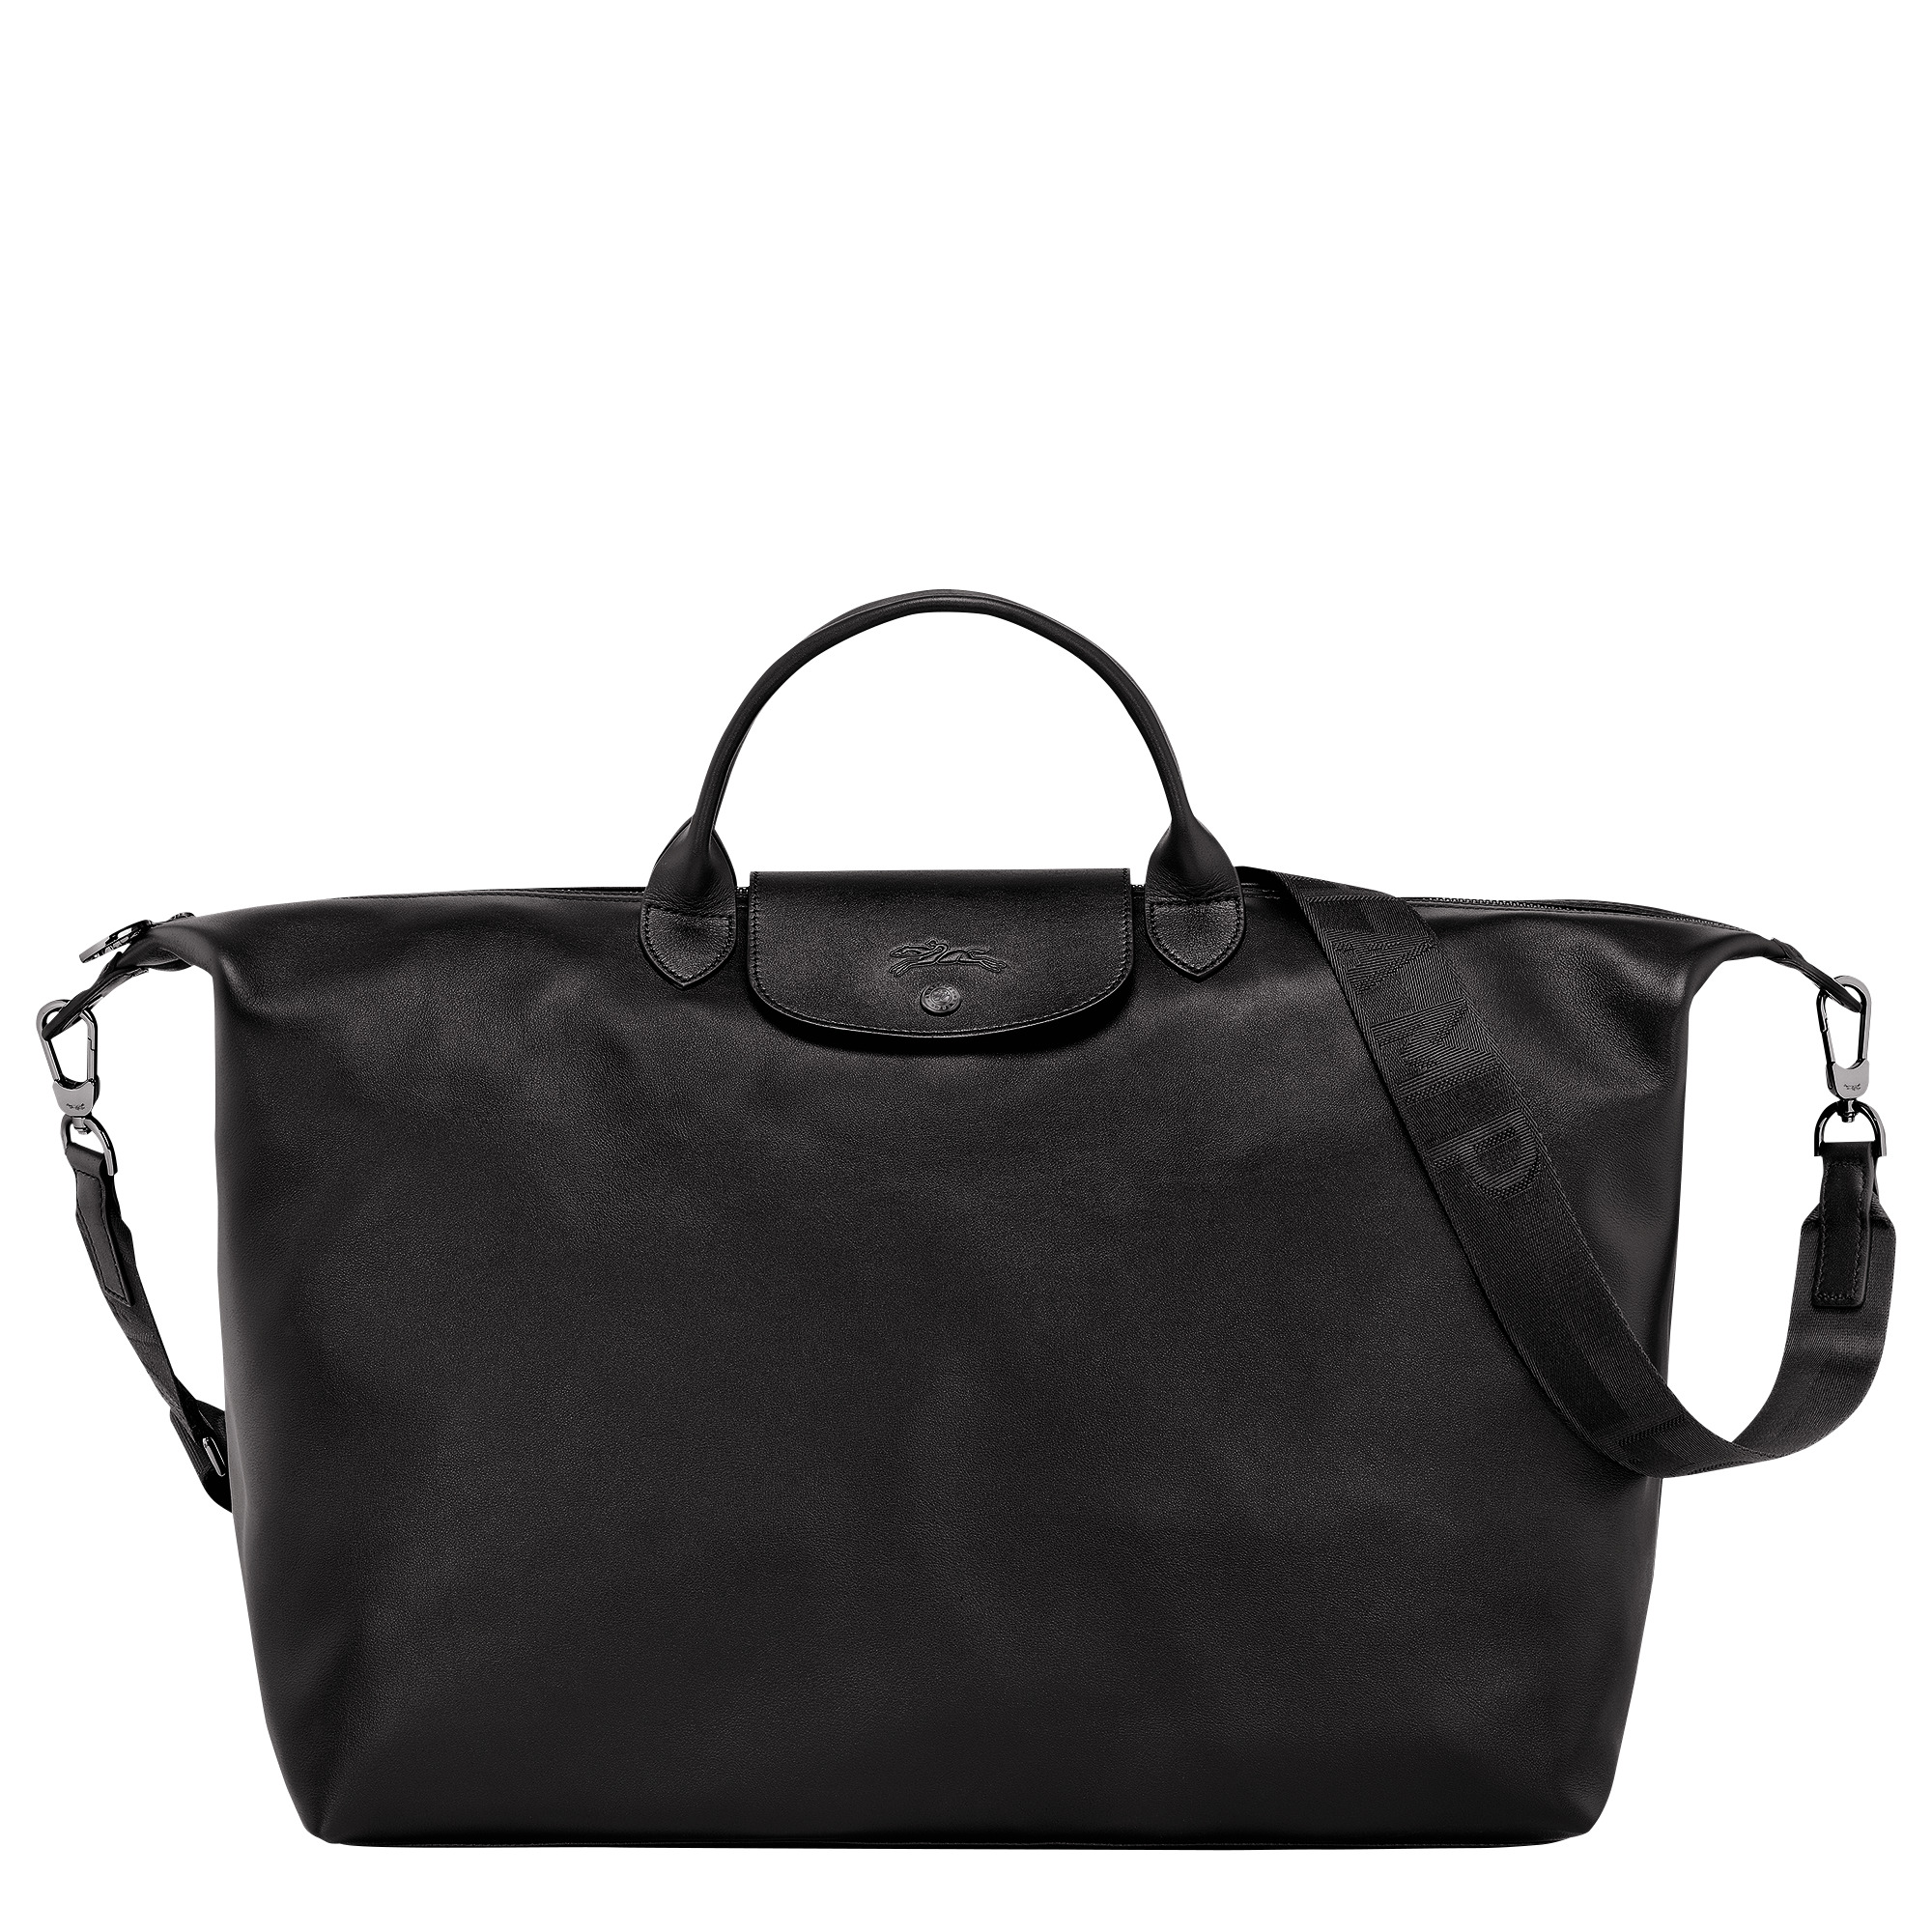 Le Pliage Xtra S Travel bag Black - Leather - 1